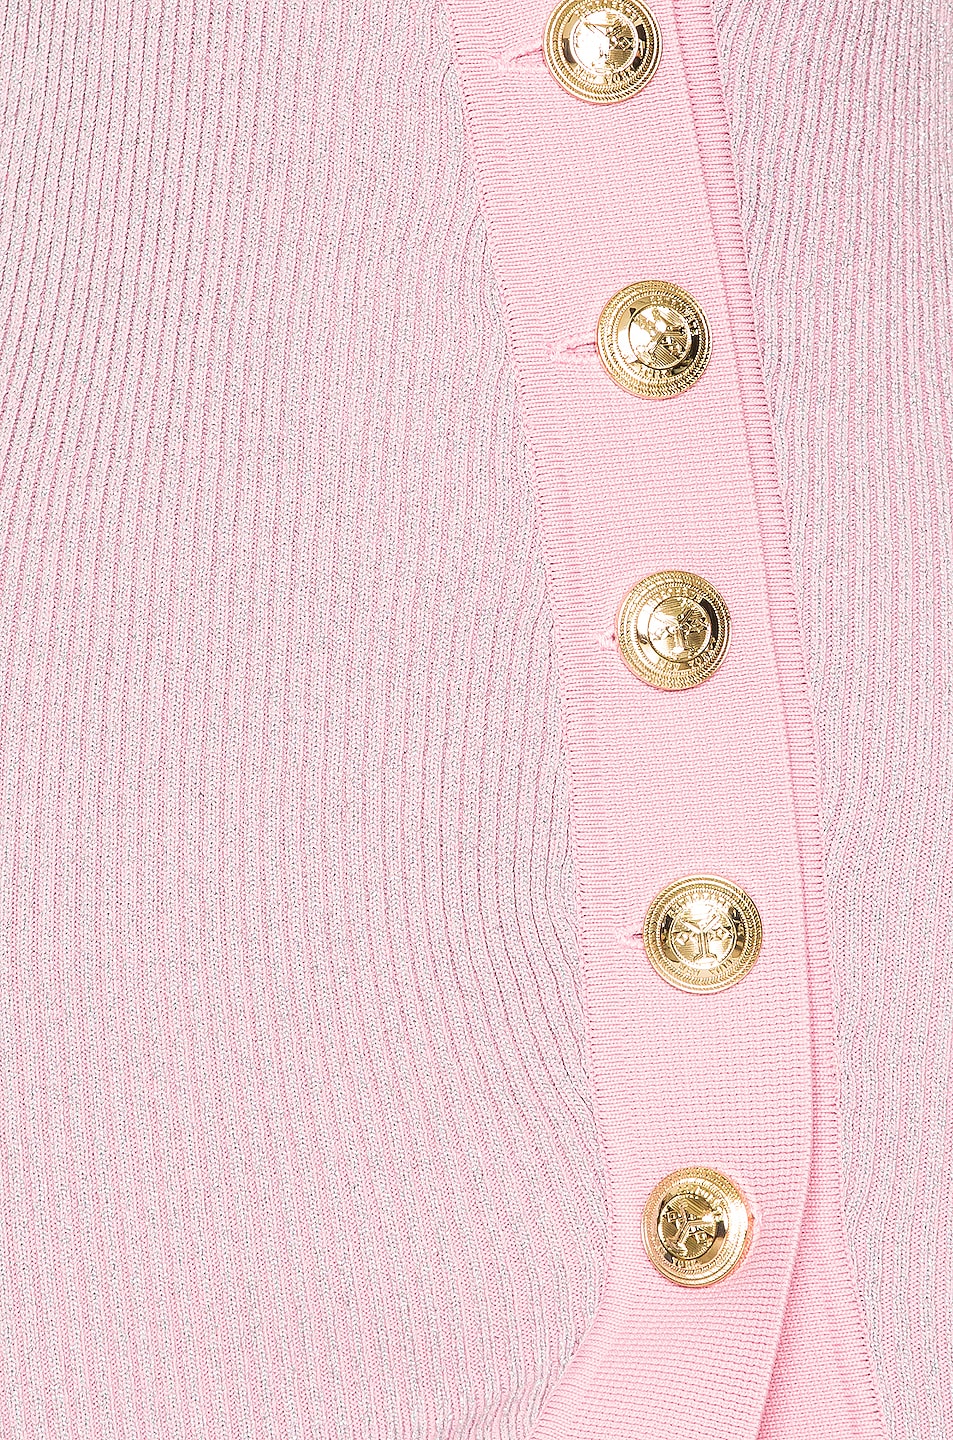 Retrofete Mimi Dress in Pink Marshmallow SIZE X-SMALL